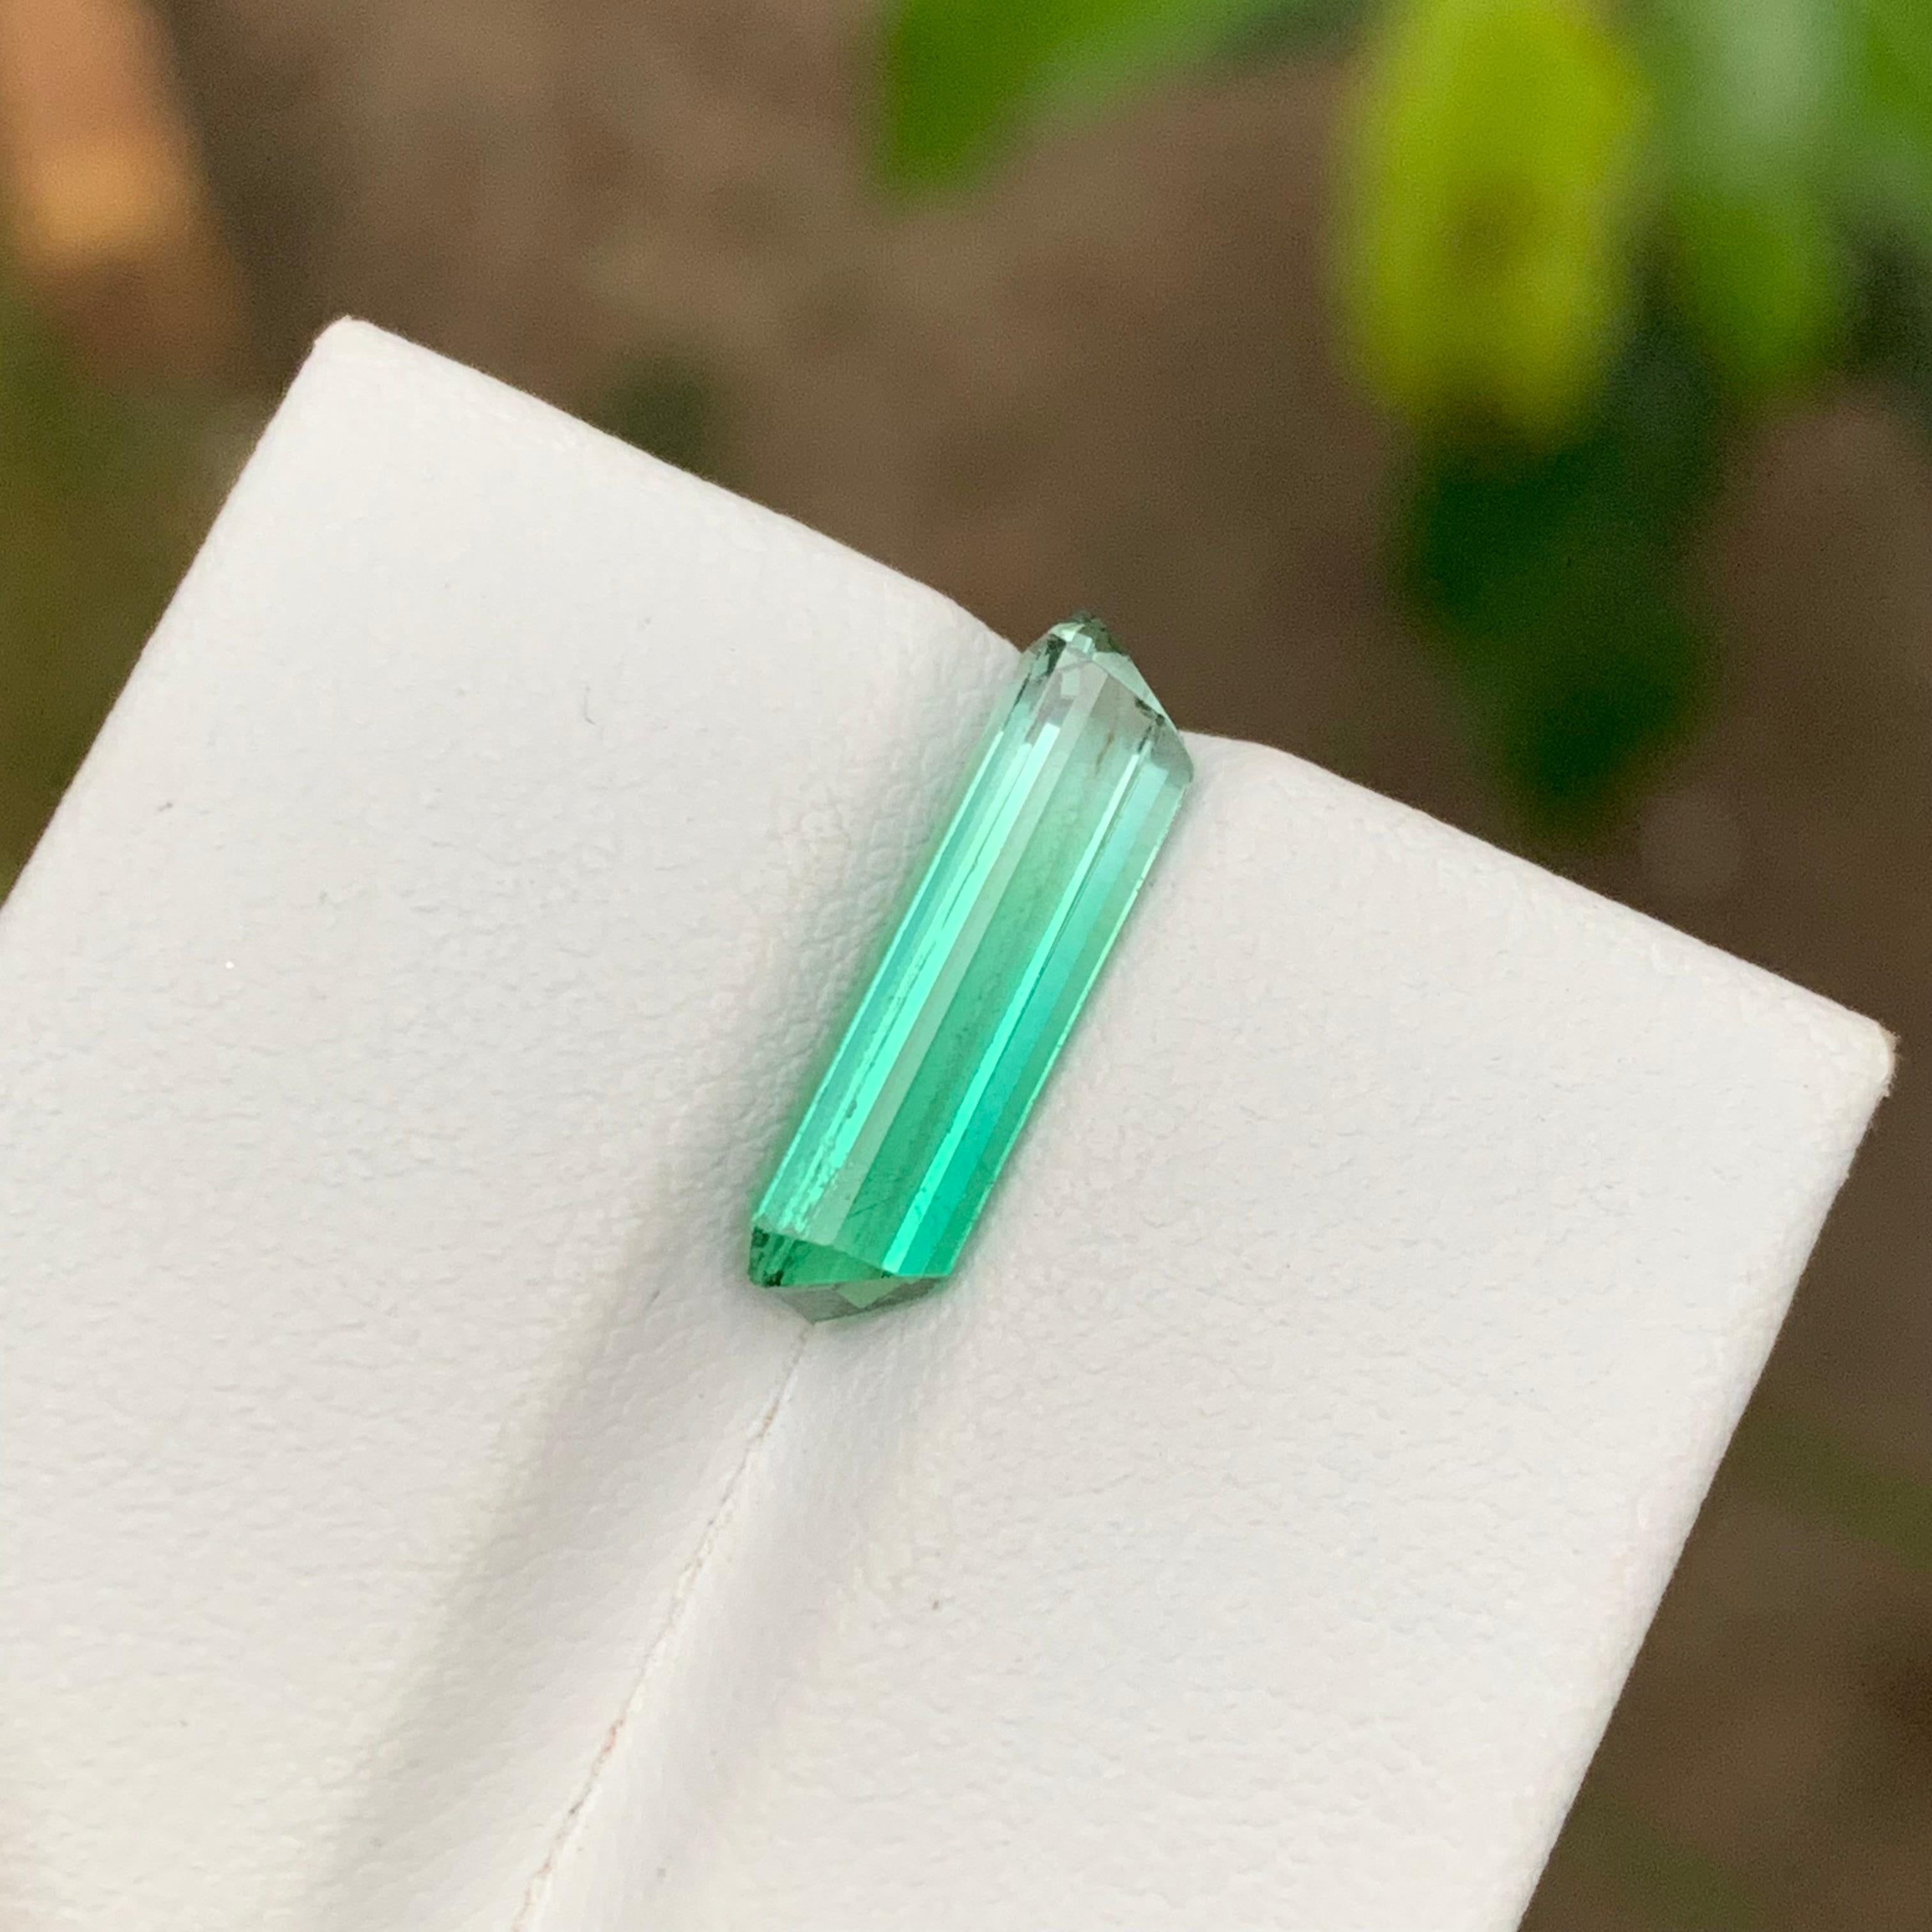 Rare Vivid Bluish Green Bicolor Tourmaline Gemstone 2.85 Ct Emerald Cut for Ring For Sale 4